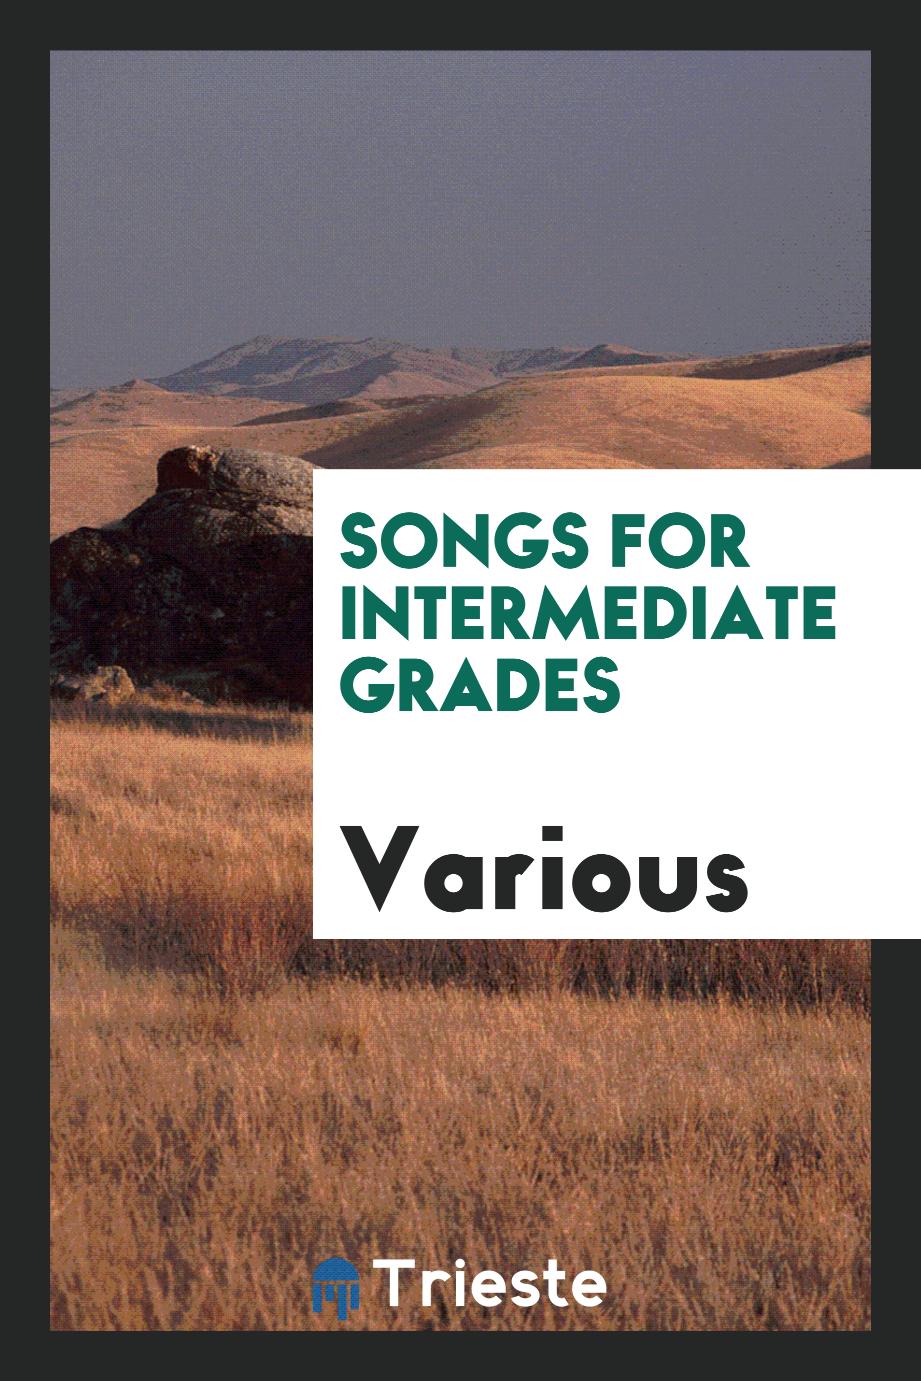 Songs for Intermediate Grades